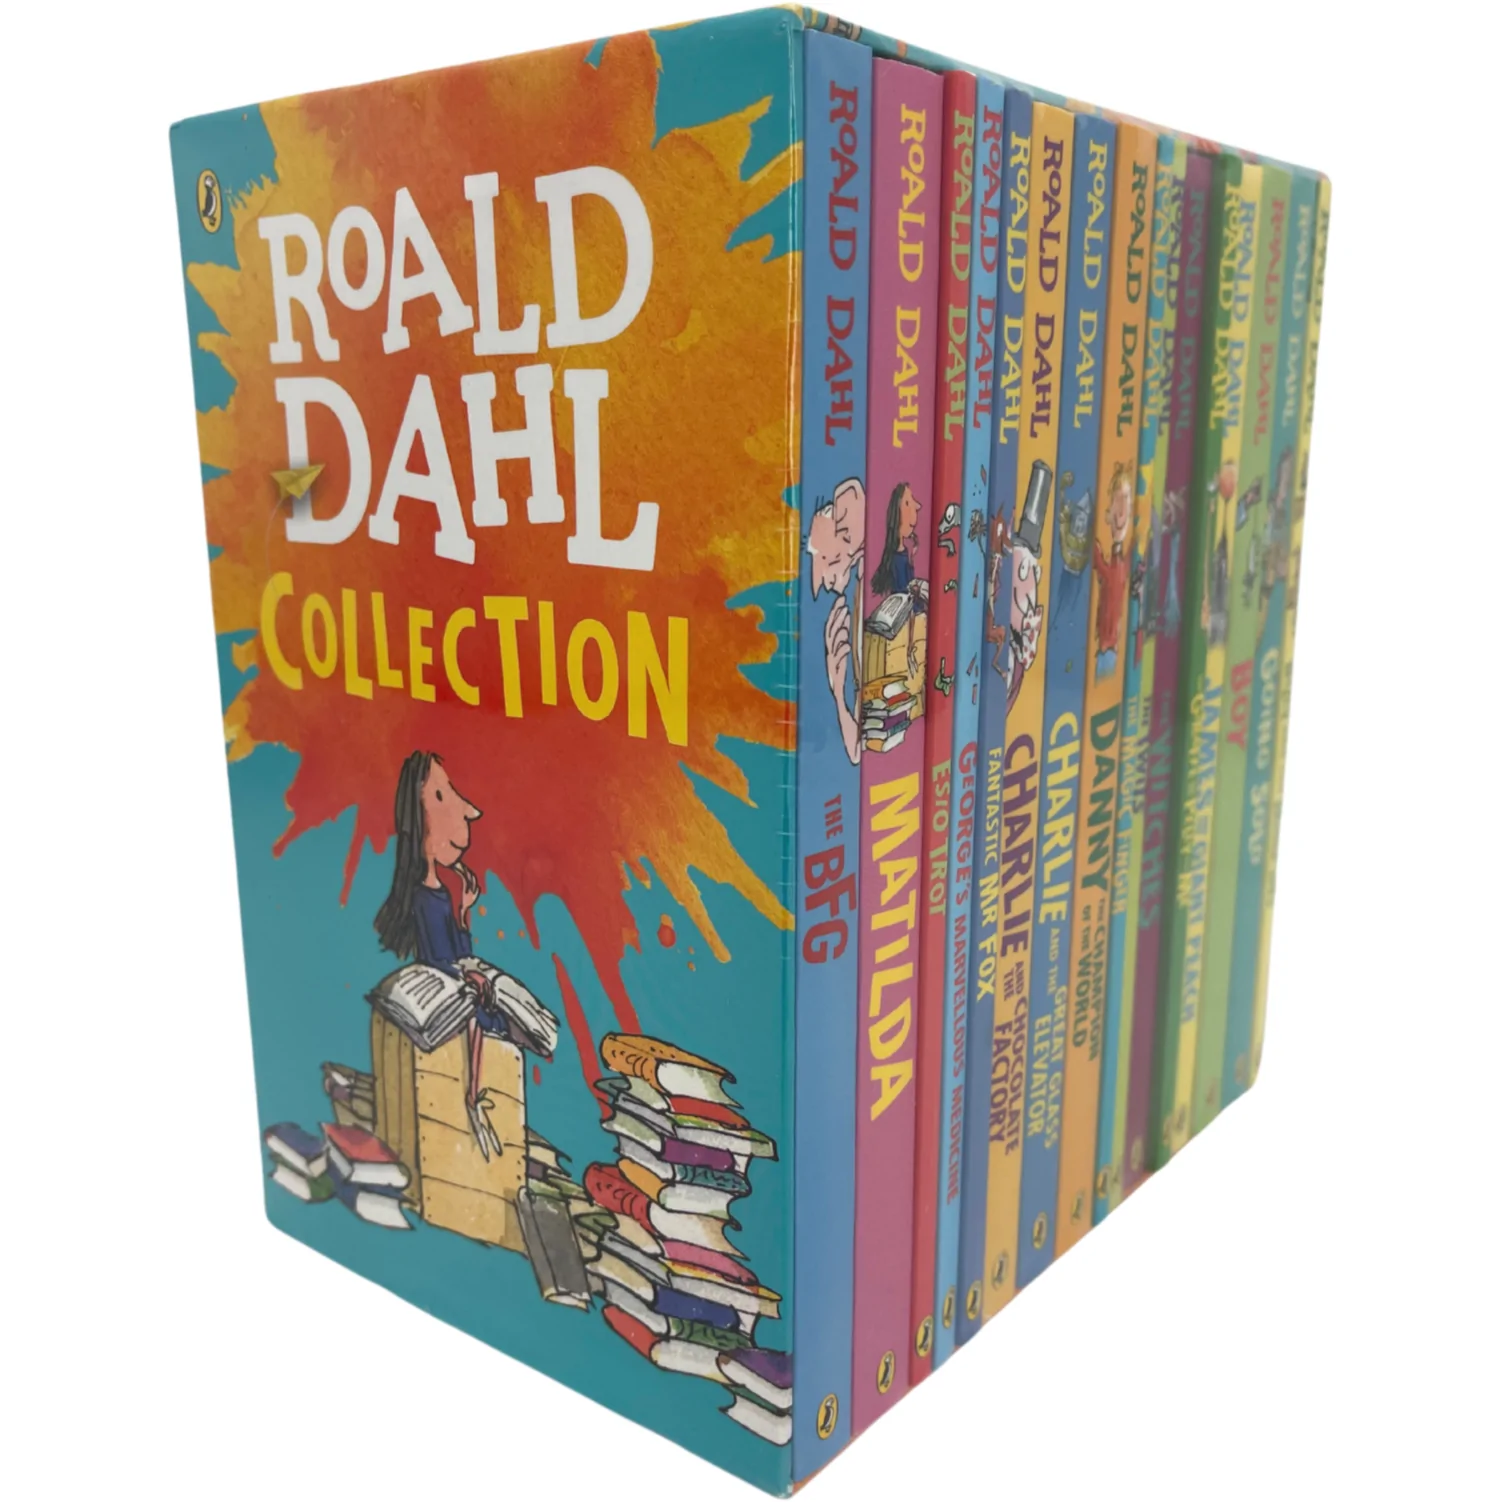 Roald Dahl Collection / 16 Book Box Set / Hardcover Books